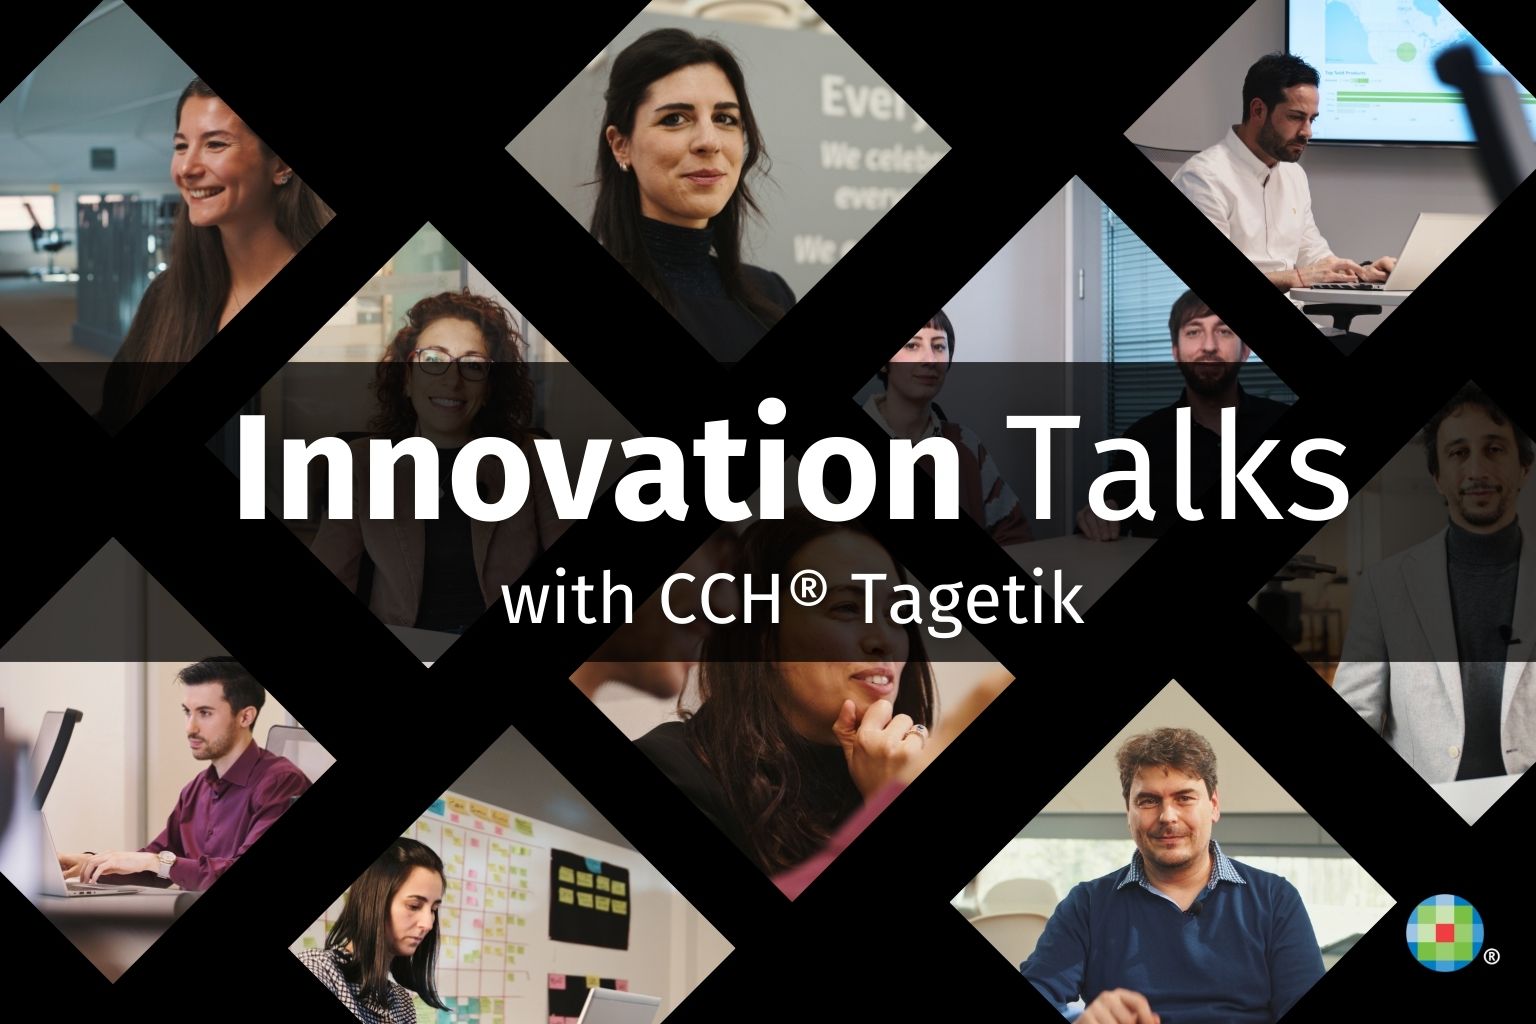 Innovation talks with CCH Tagetik